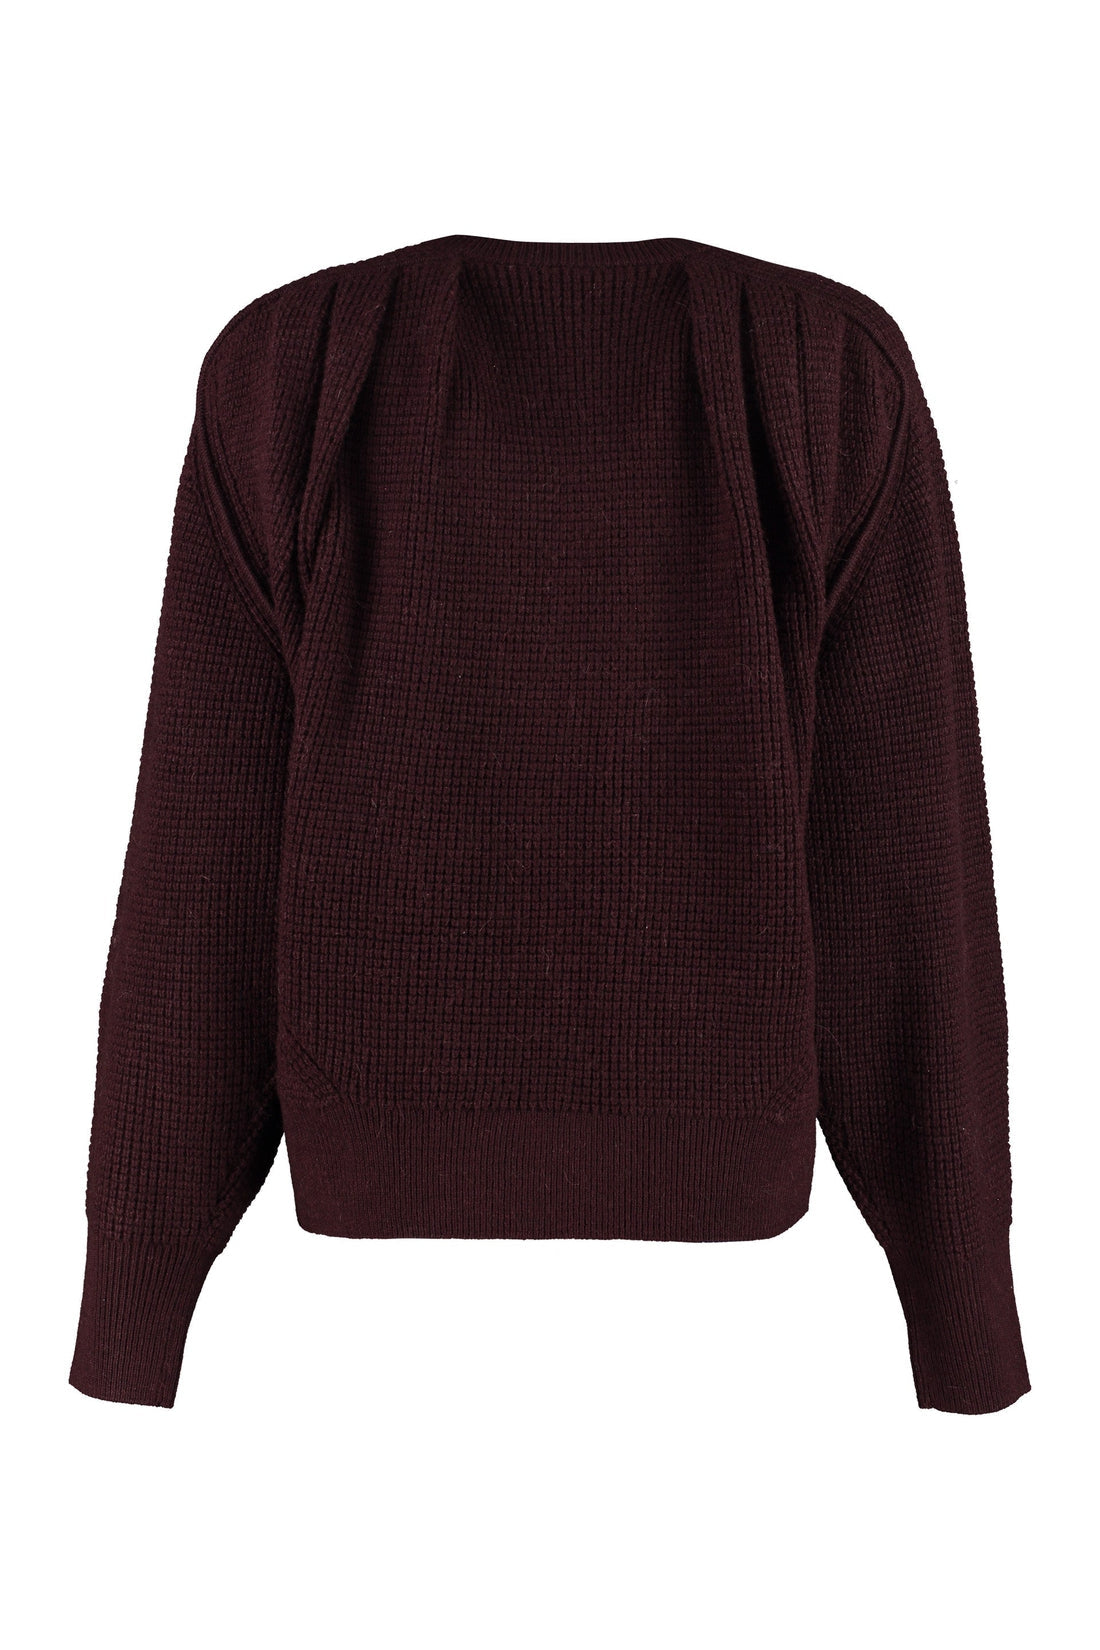 Iro-OUTLET-SALE-Wool-blend crew-neck sweater-ARCHIVIST